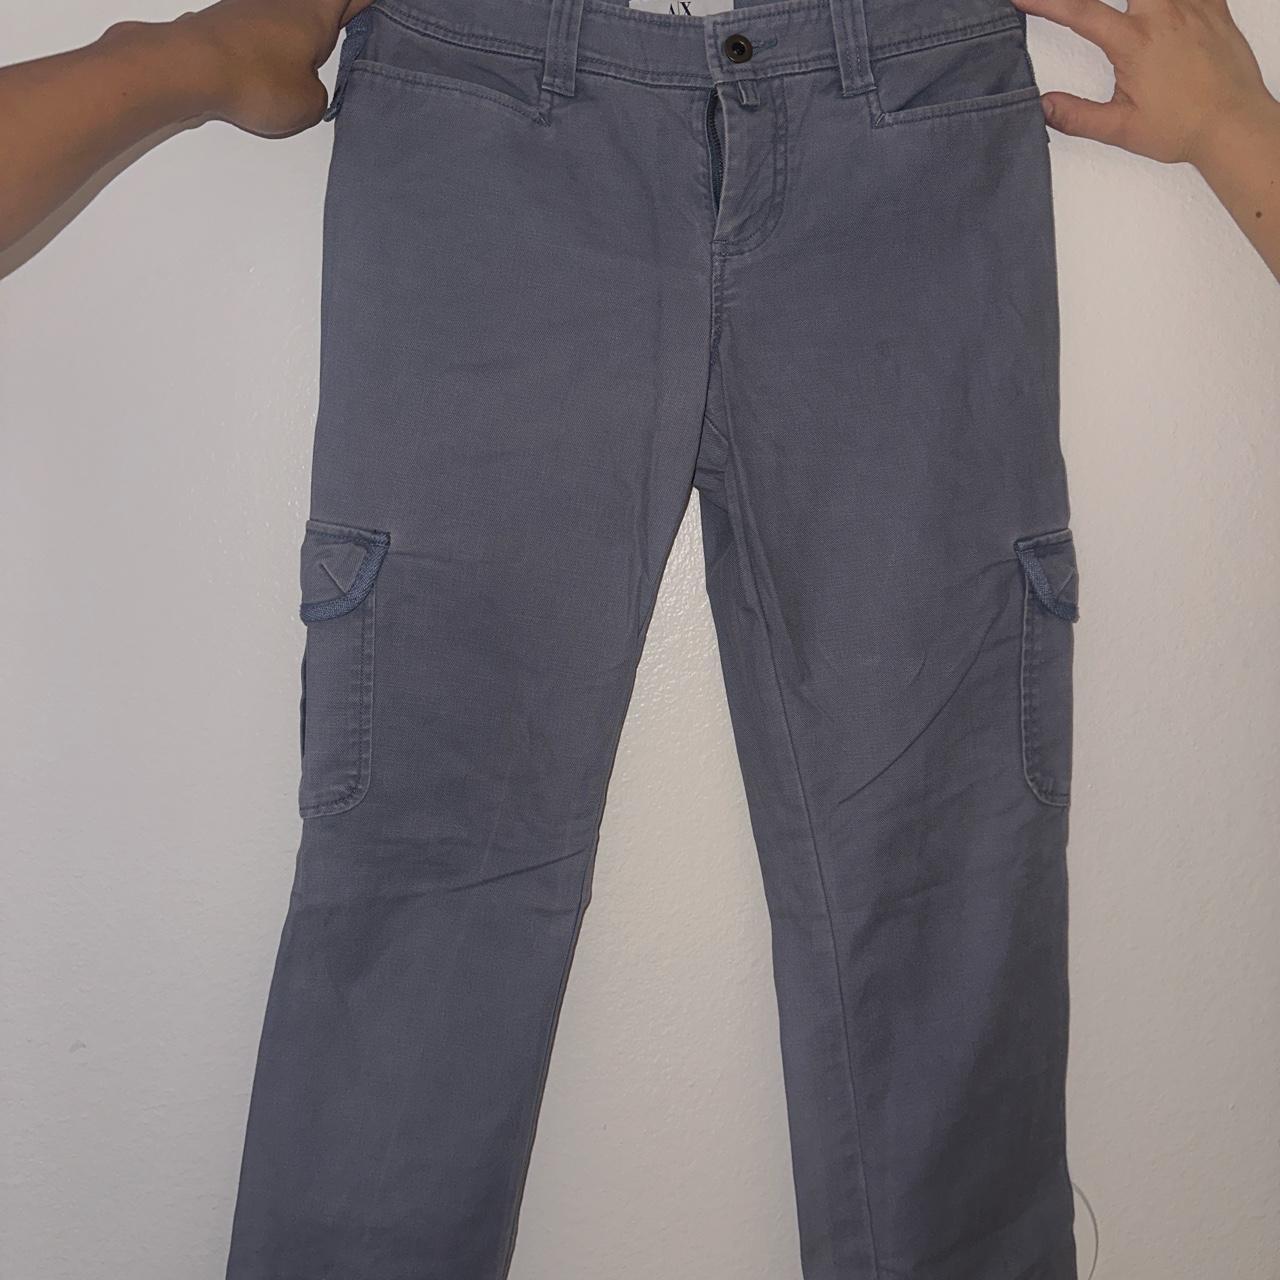 EMPORIO ARMANI: trousers for women - Blue | Emporio Armani trousers  H3NP30C2300 online at GIGLIO.COM